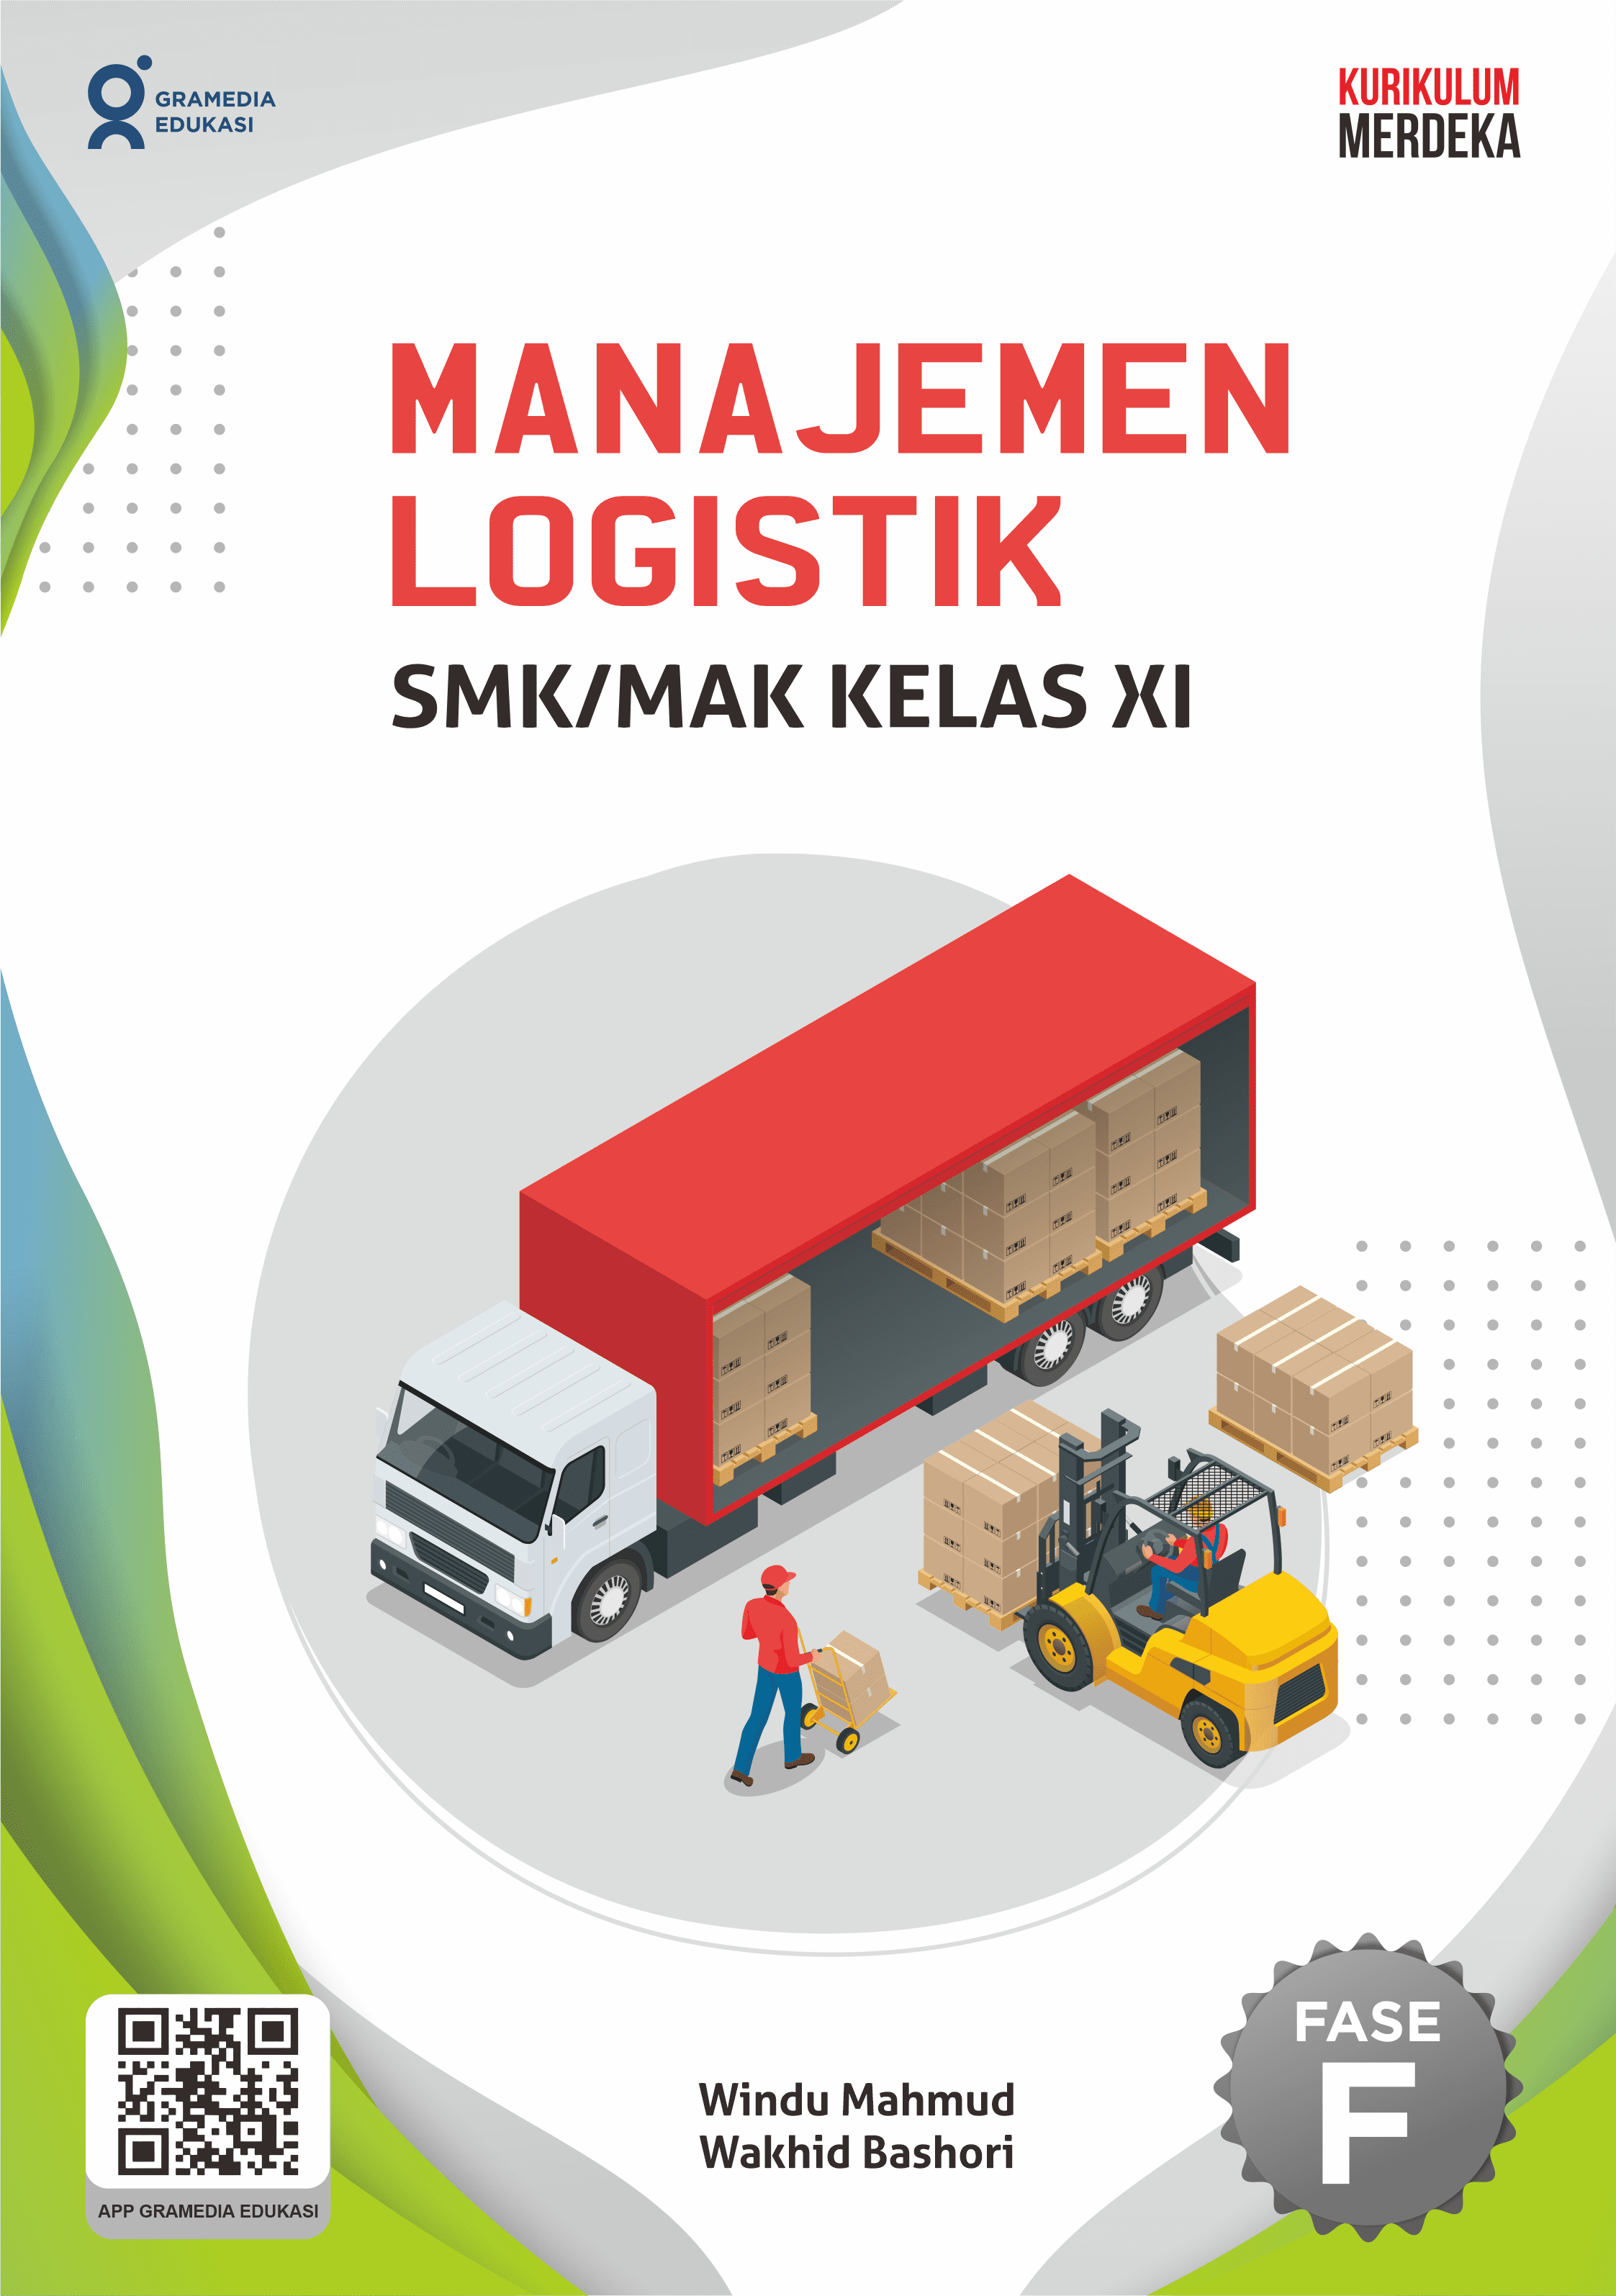 Manajemen logistik SMK/MAK kelas XI